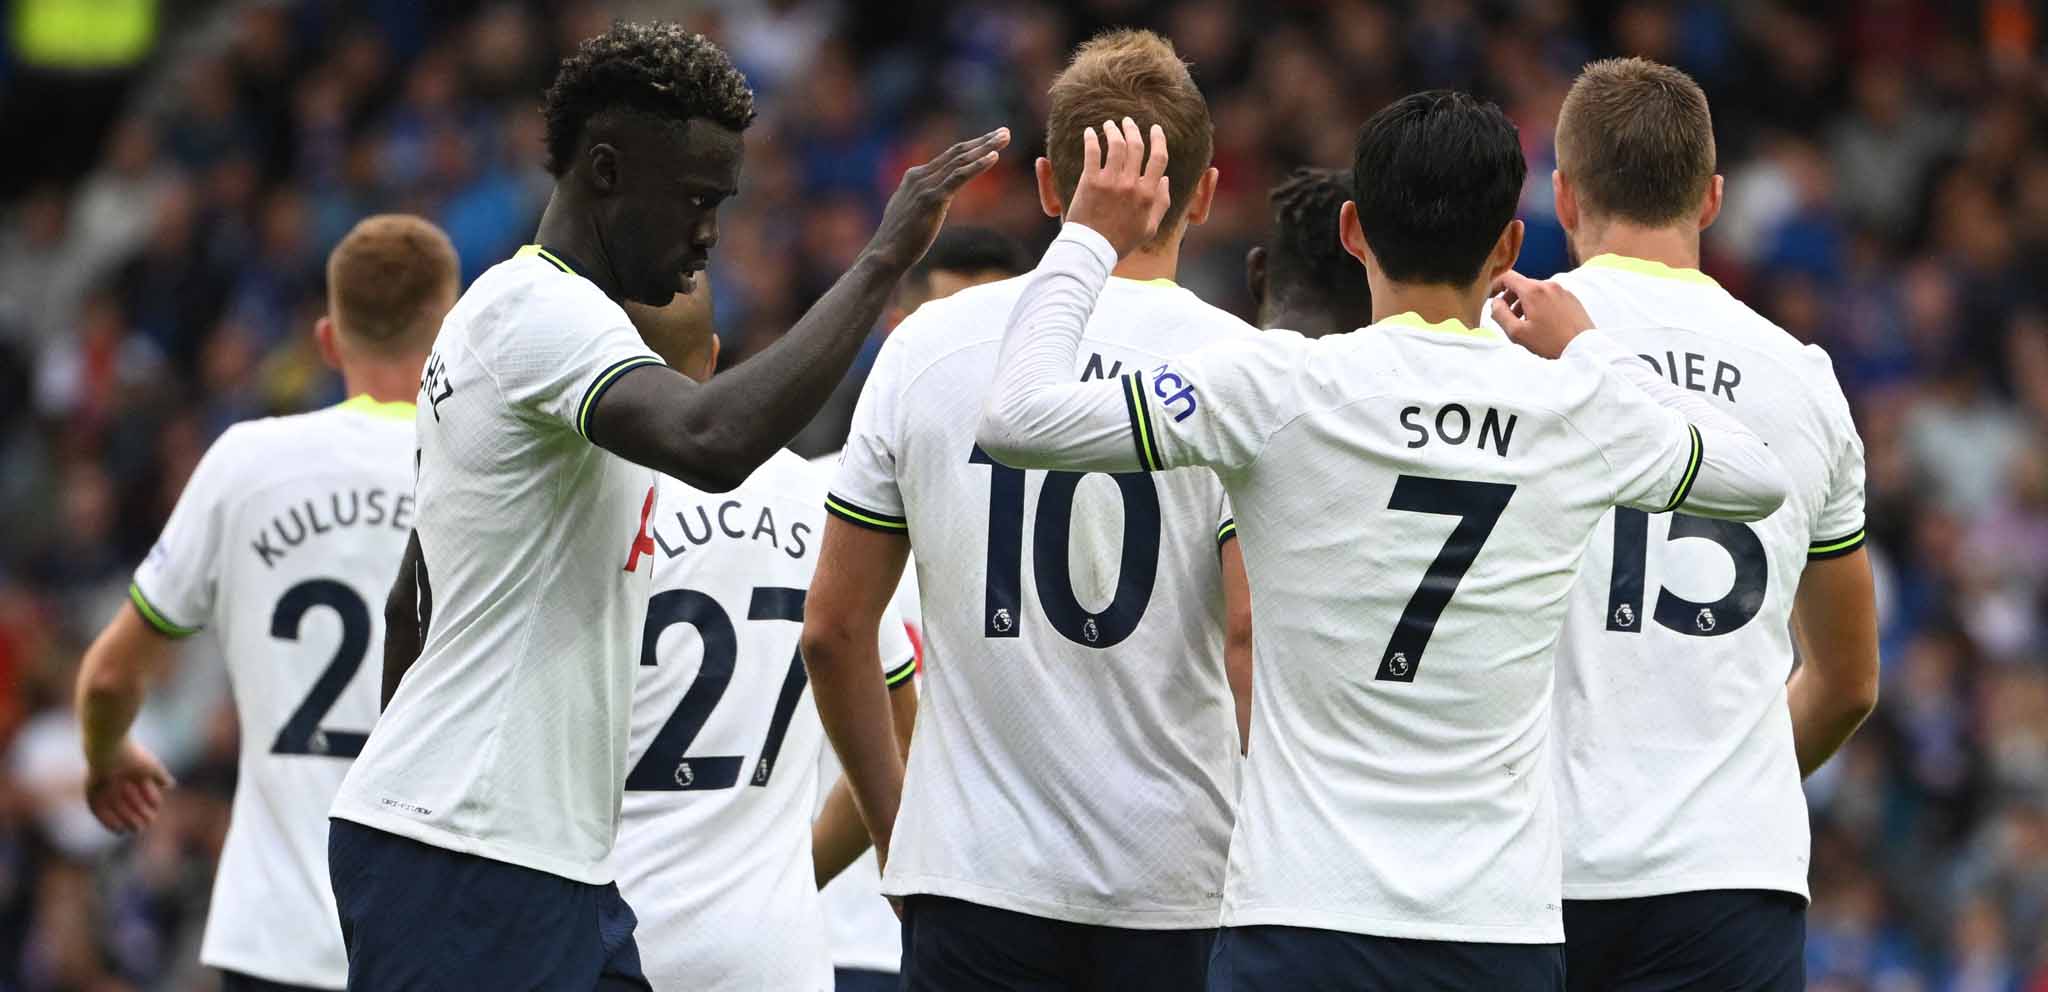 20 Facts About Tottenham Hotspur - Facts.net